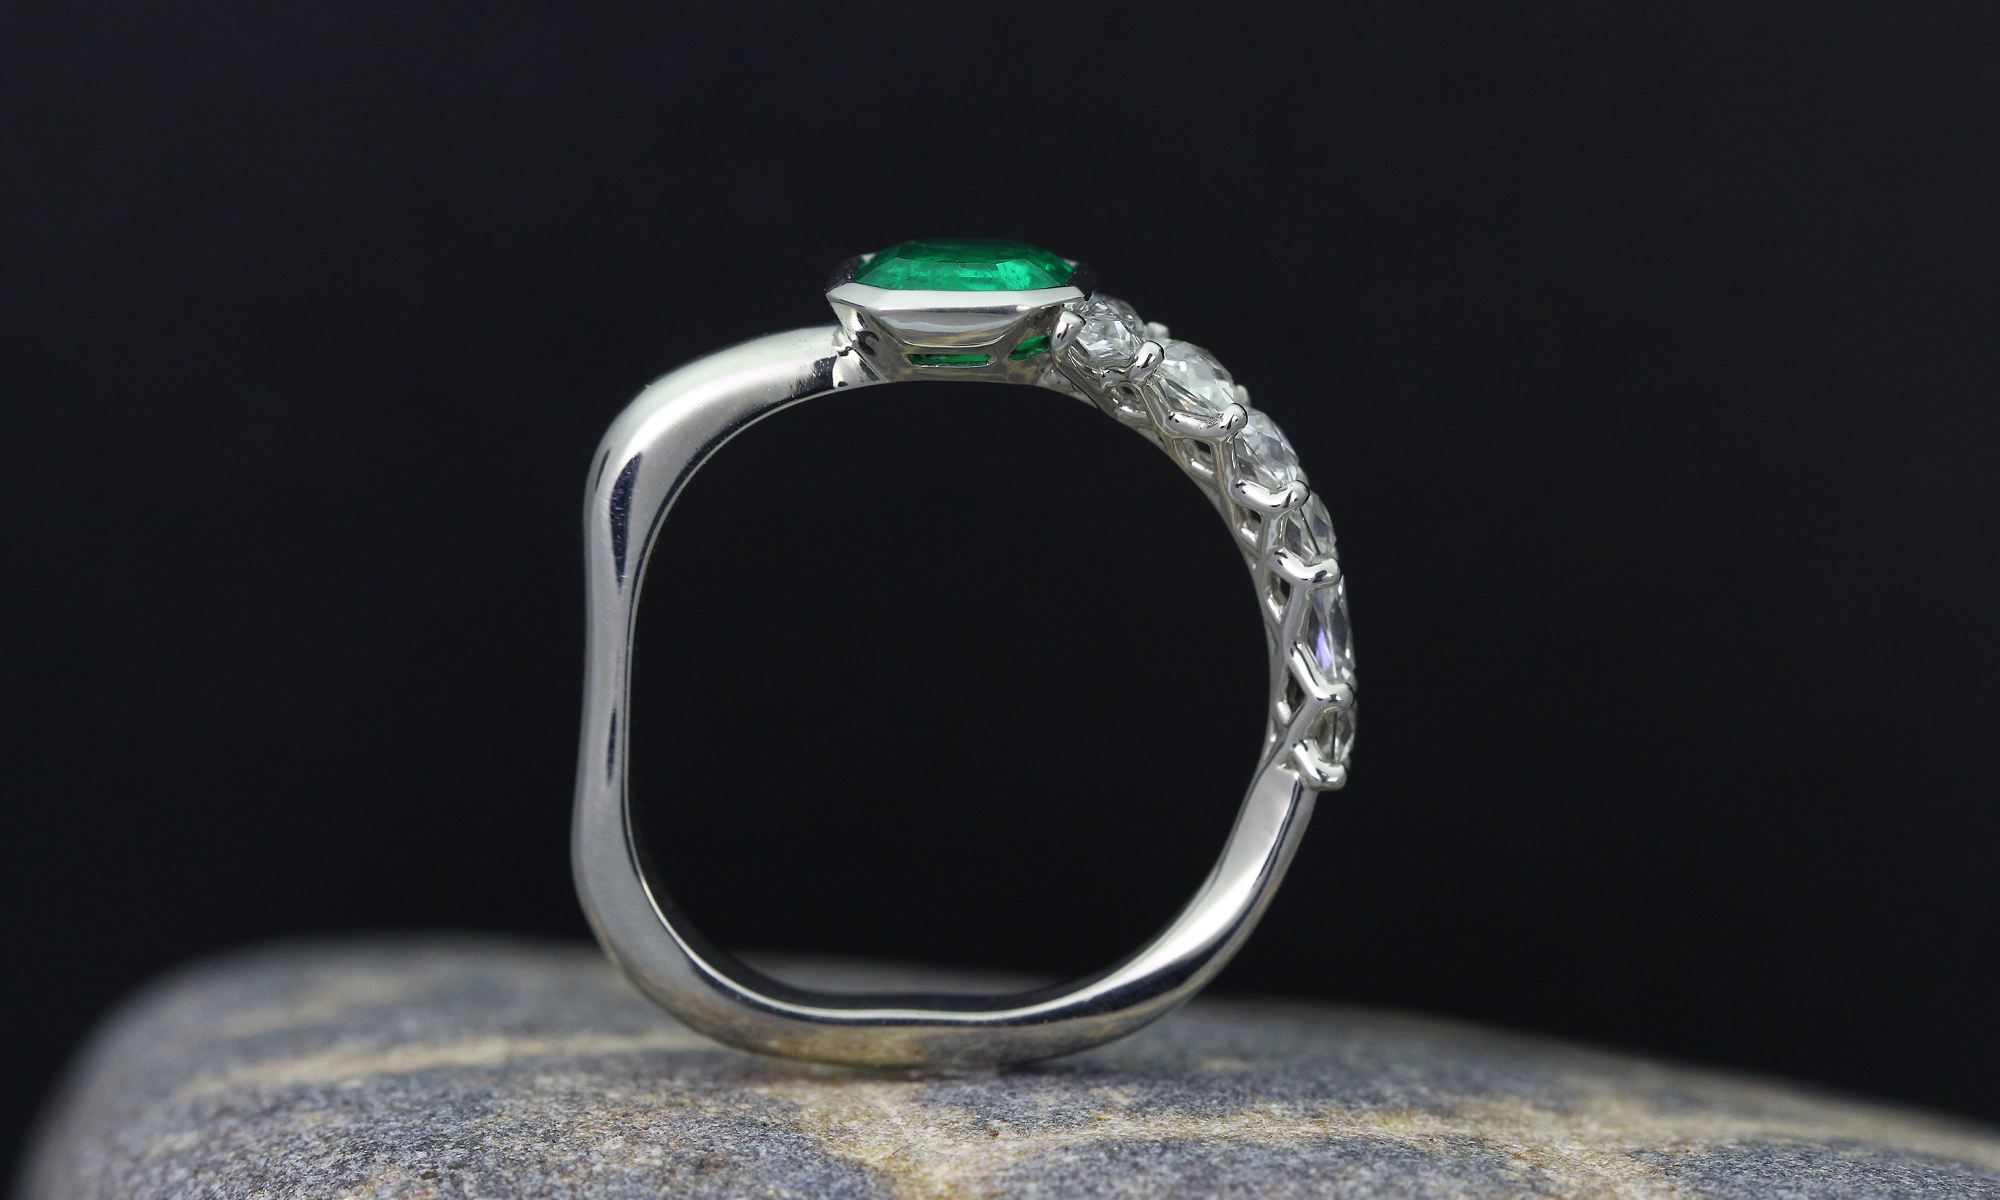 Emerald Ring 1.43 Ct. Platinum 950 | The Natural Emerald Company